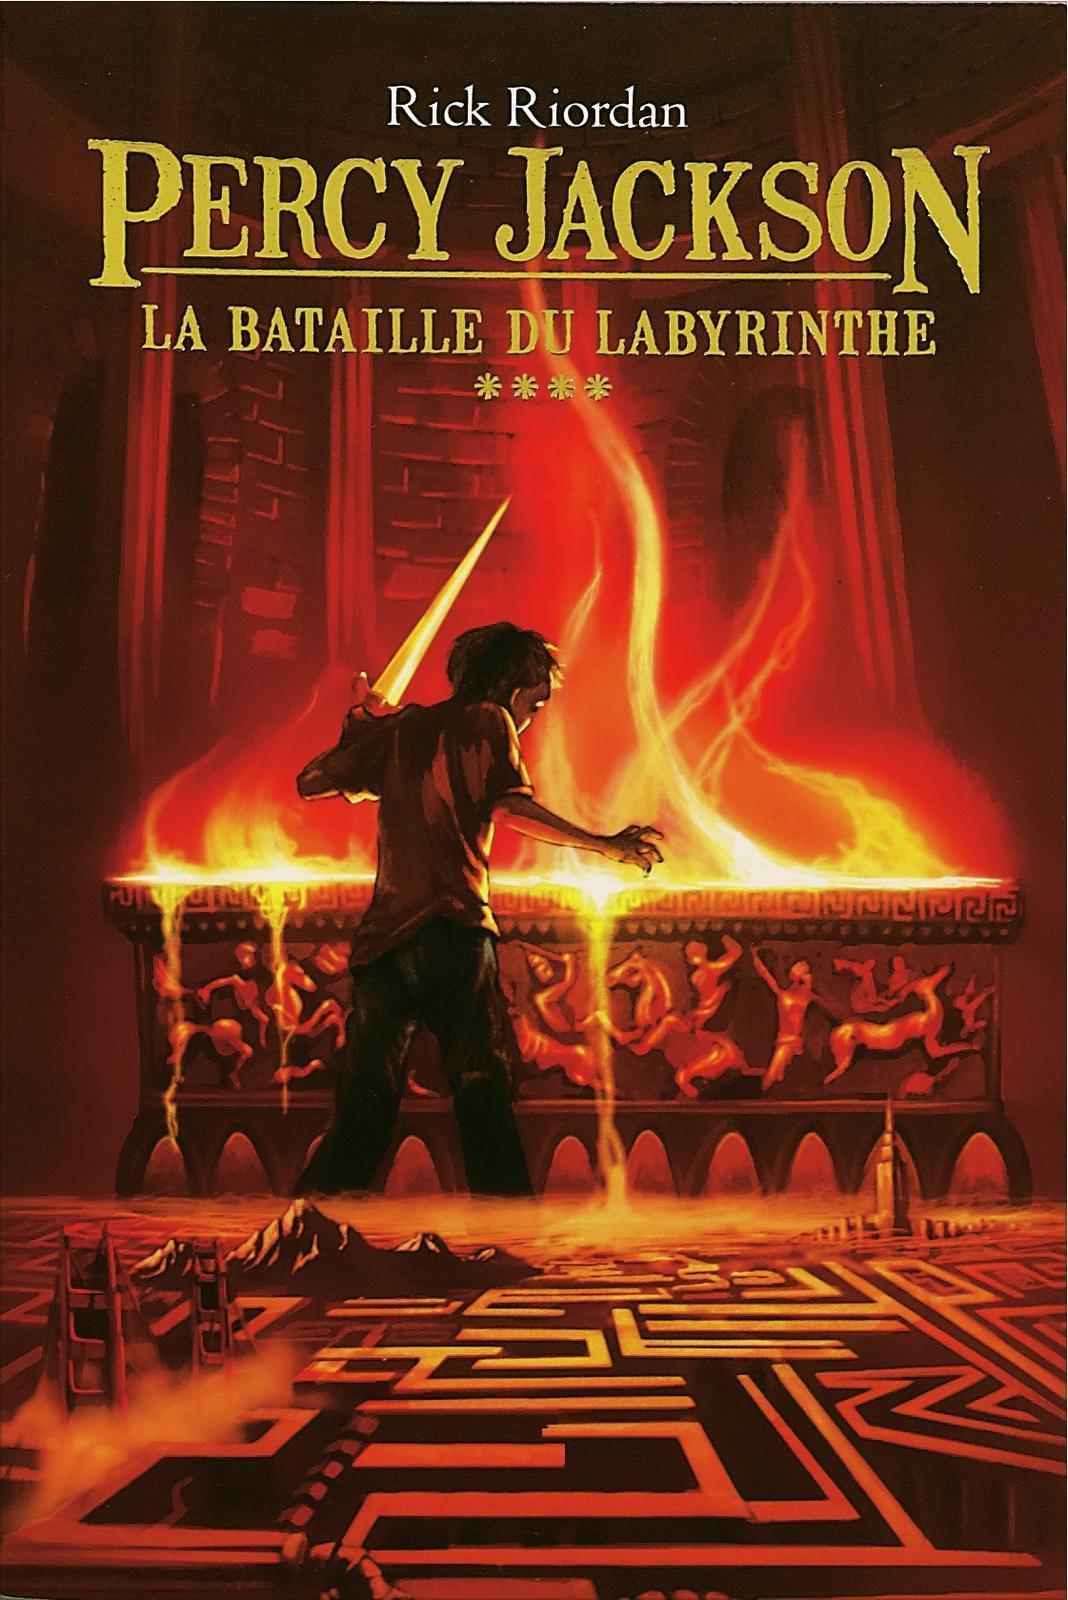 Rick Riordan: La Bataille du labyrinthe (French language)